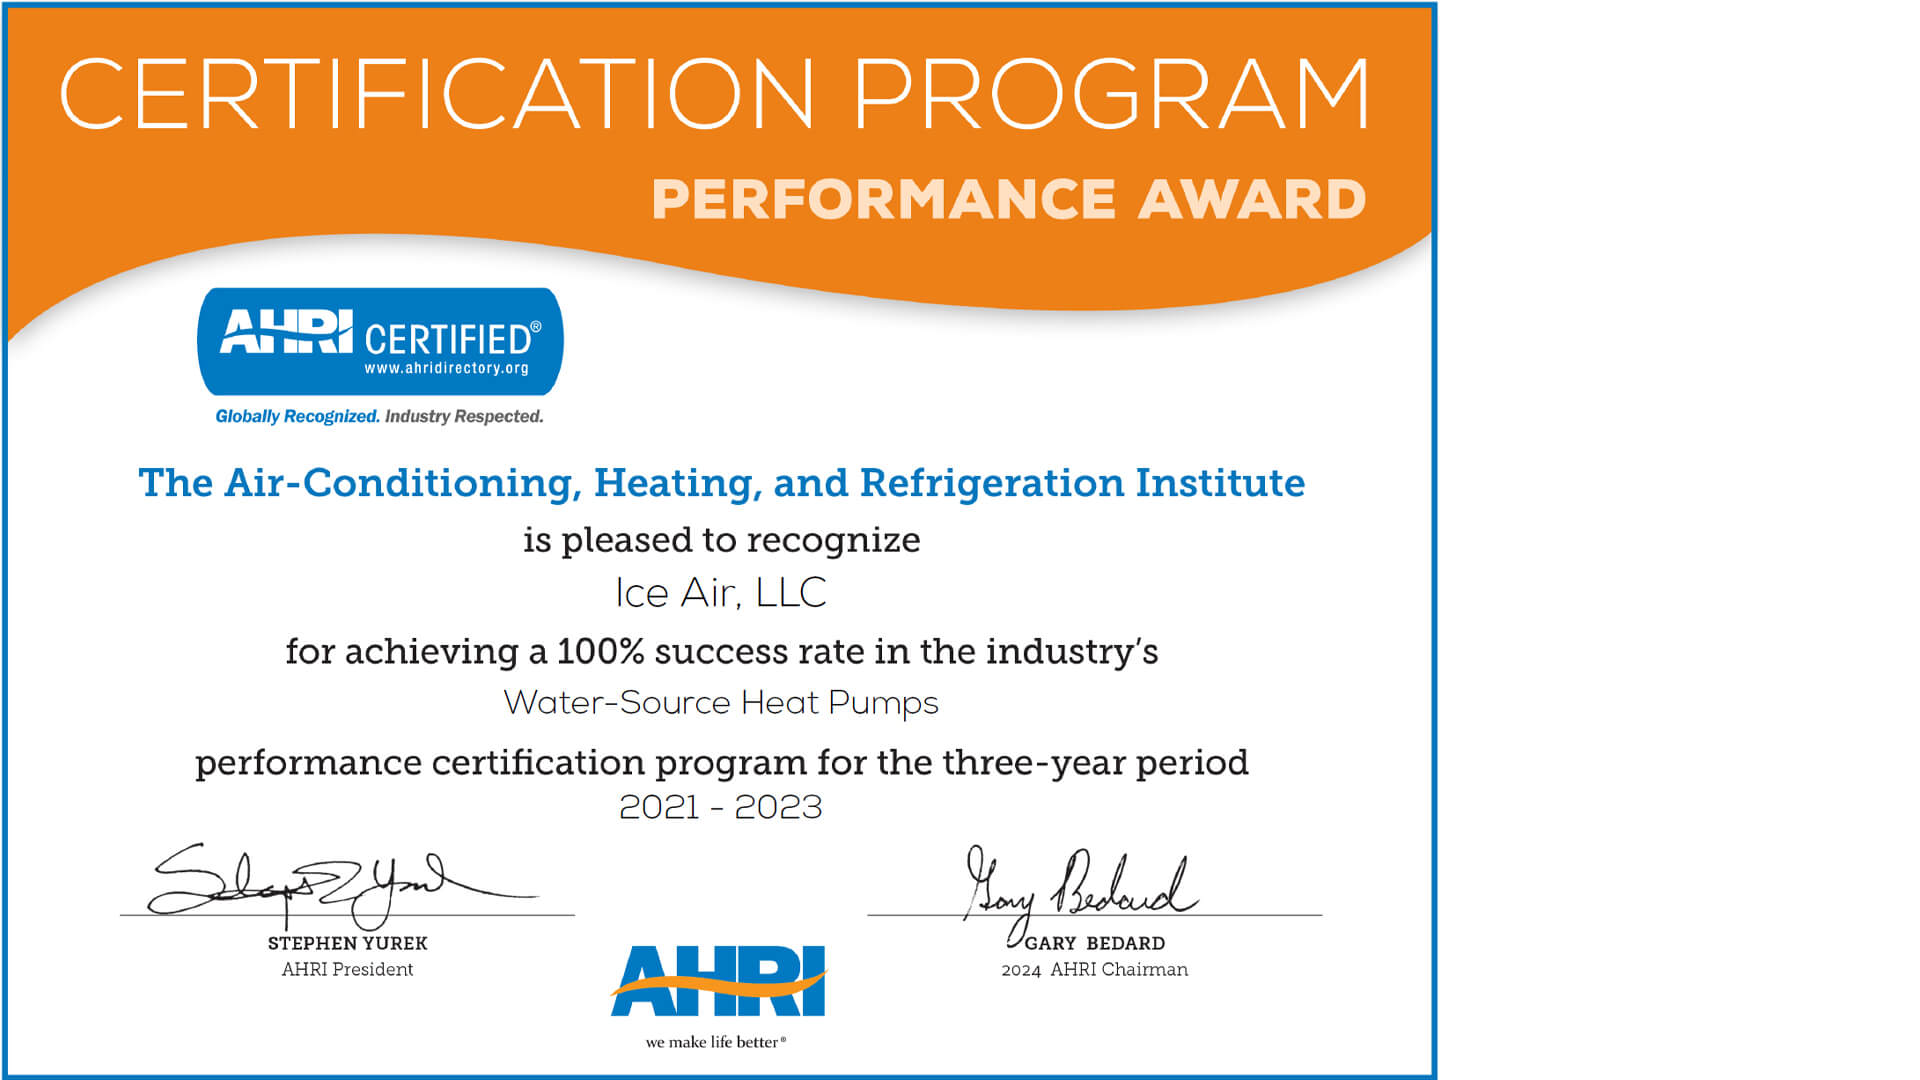 ice-air-water-source-heat-pumps-win-ahri-3-year-performance-award